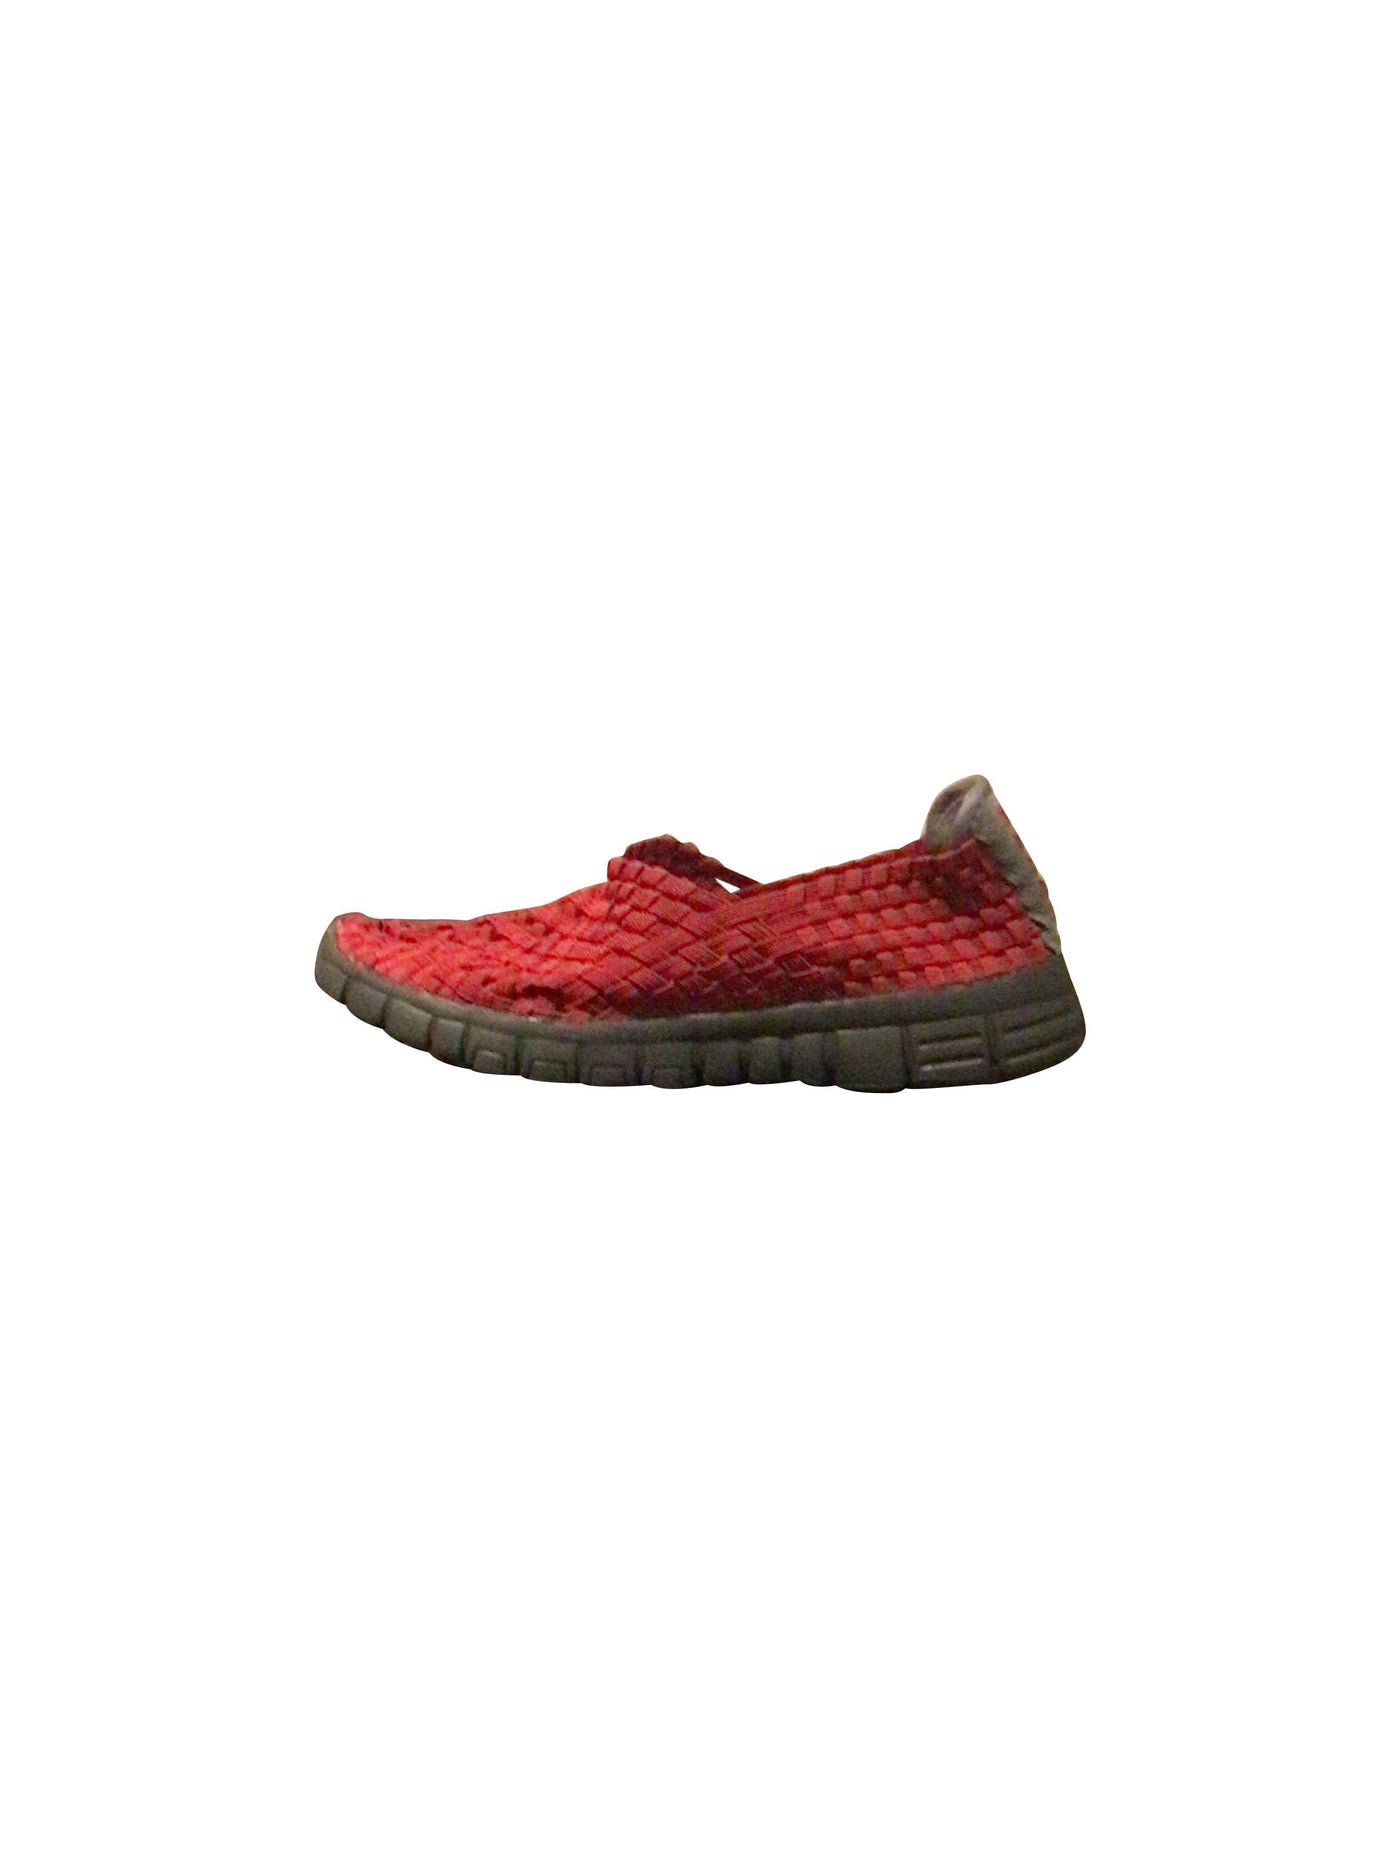 MISS SMART Flats Shoes in Red  -  39  13.99 Koop